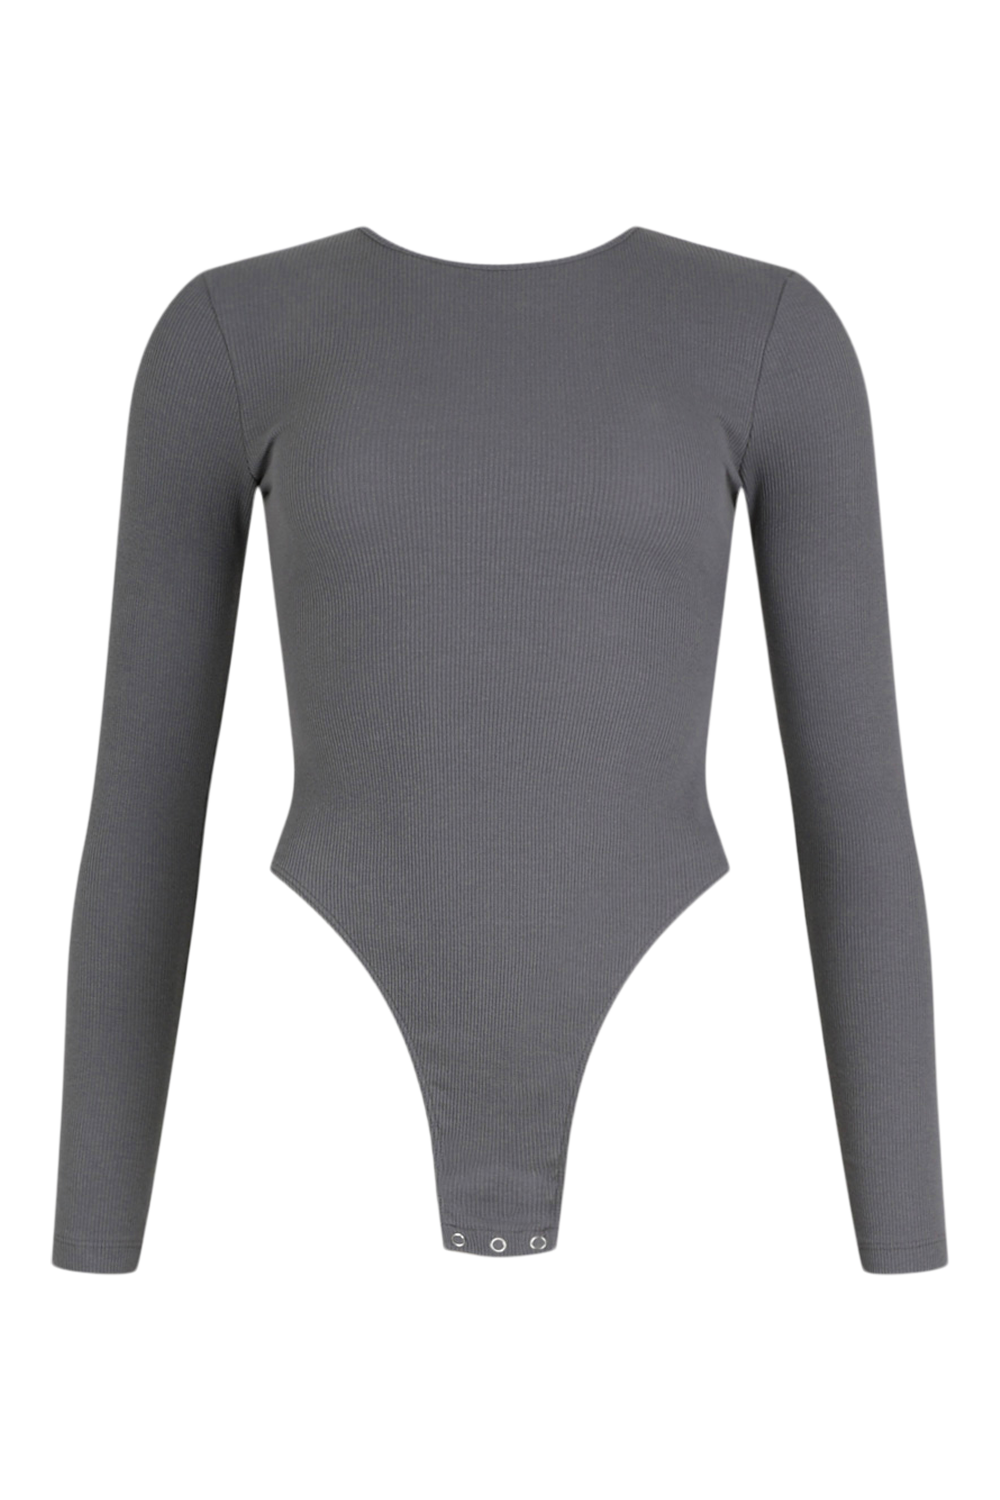 Jockey Women's Square Neck Rib Thong Bodysuit Xl Light Grey